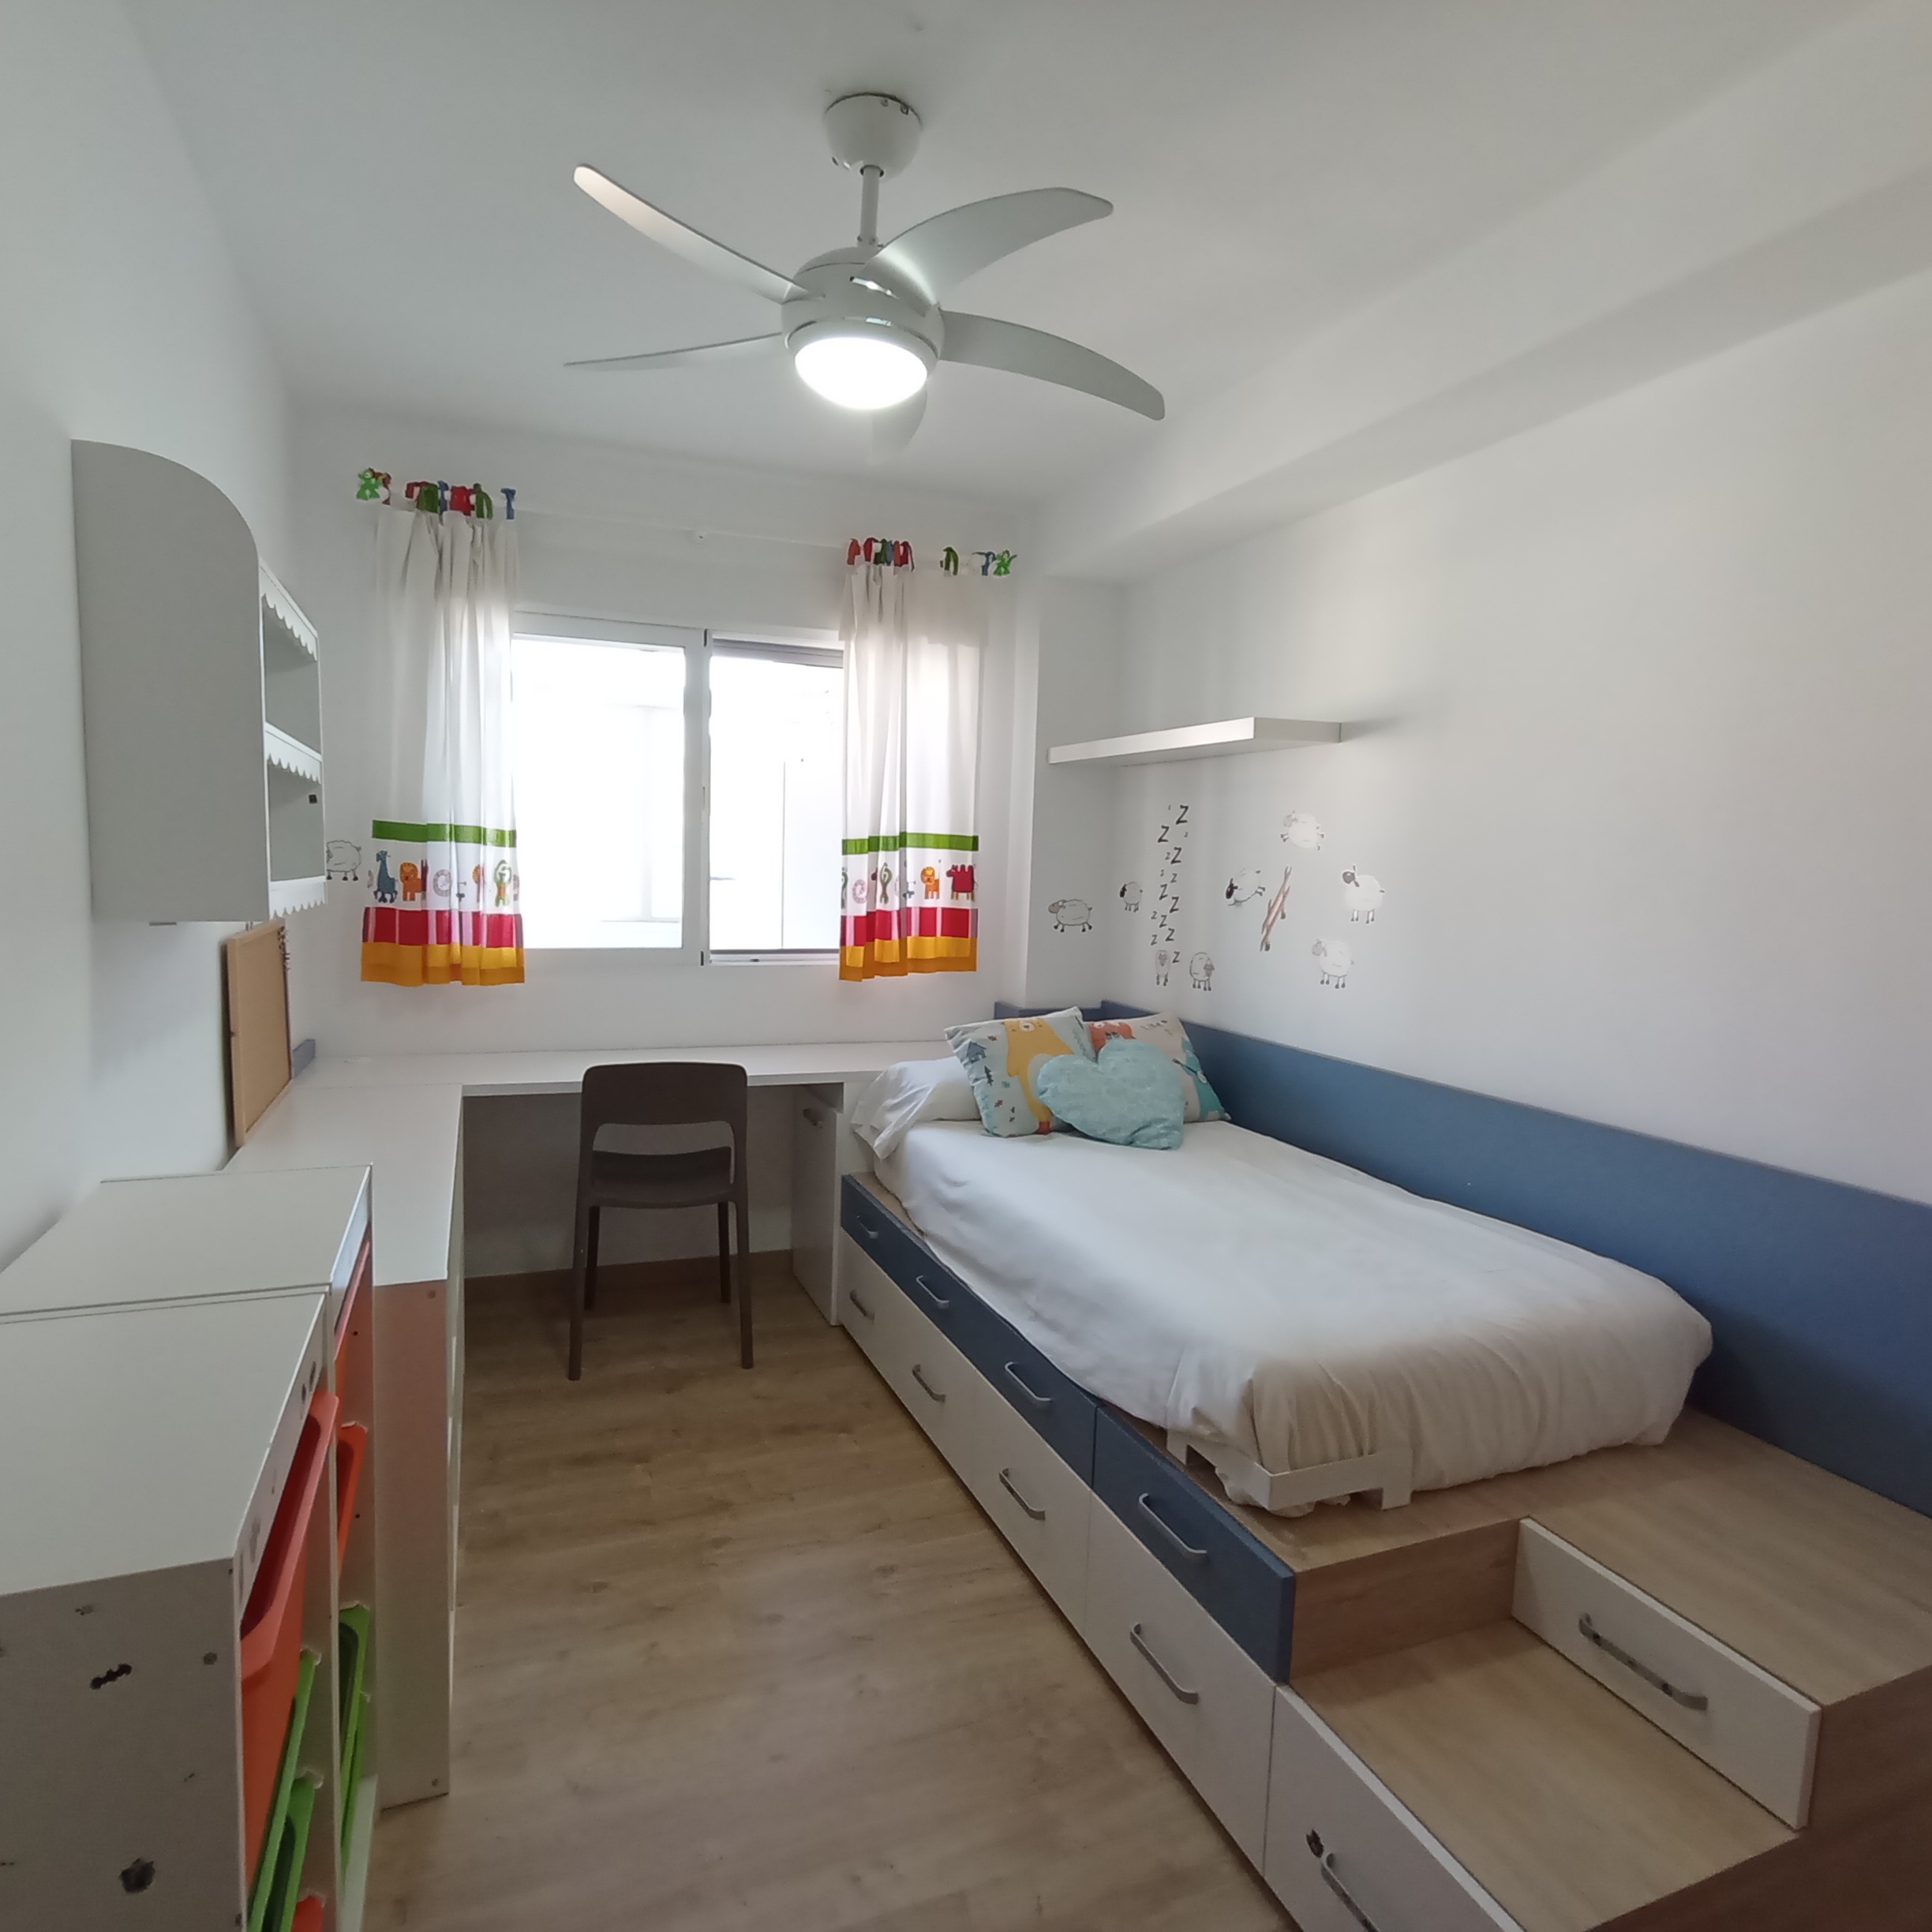 Escultor - 3 Bedroom apartment for rent in Valencia bedroom 3